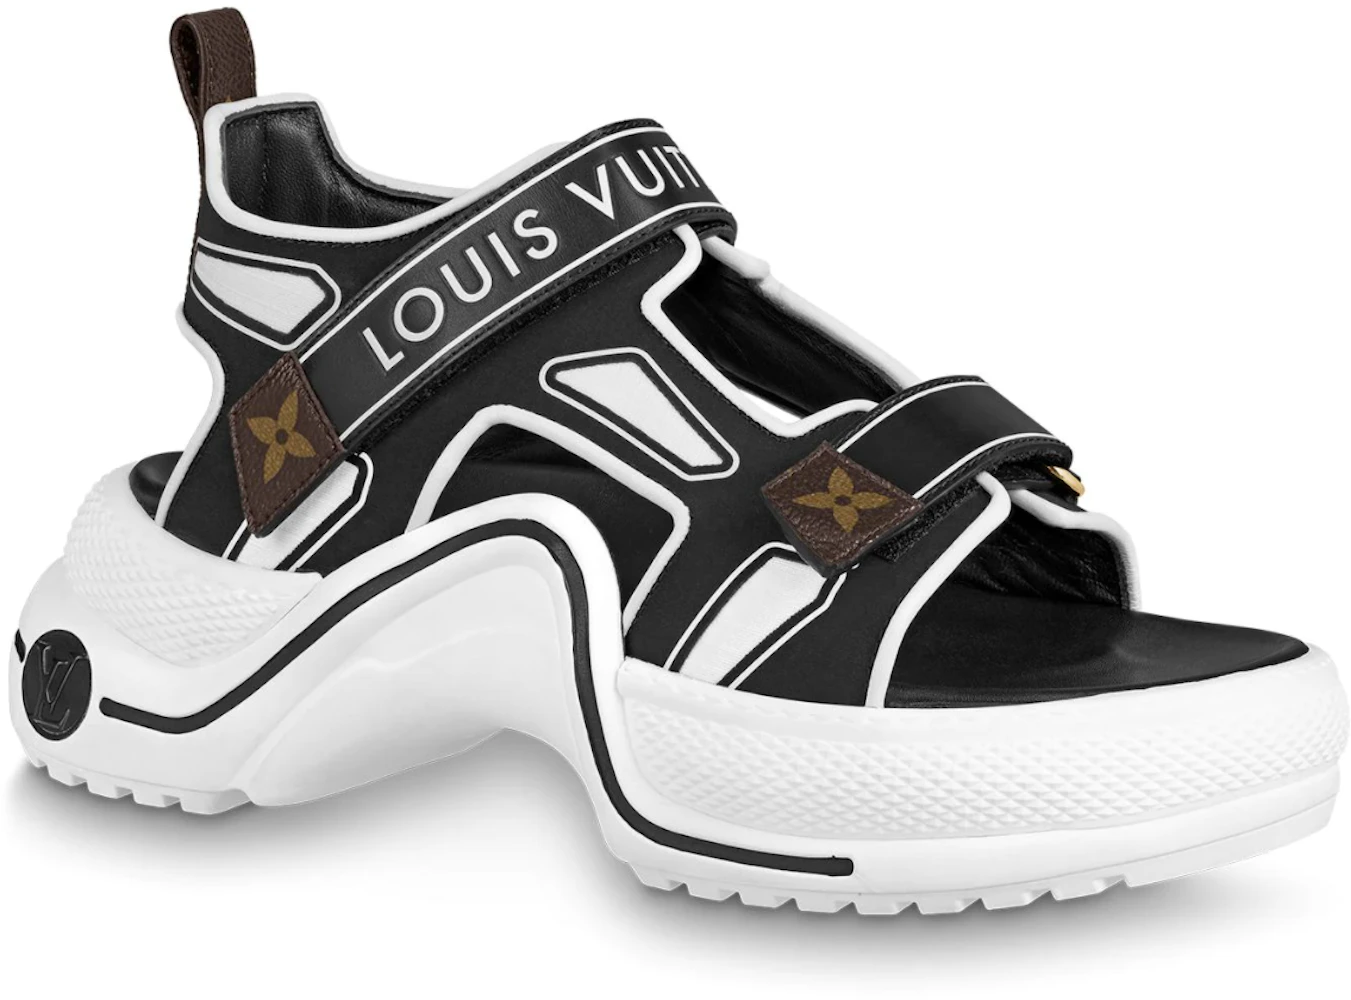 Louis Vuitton Archlight Flat Sandals